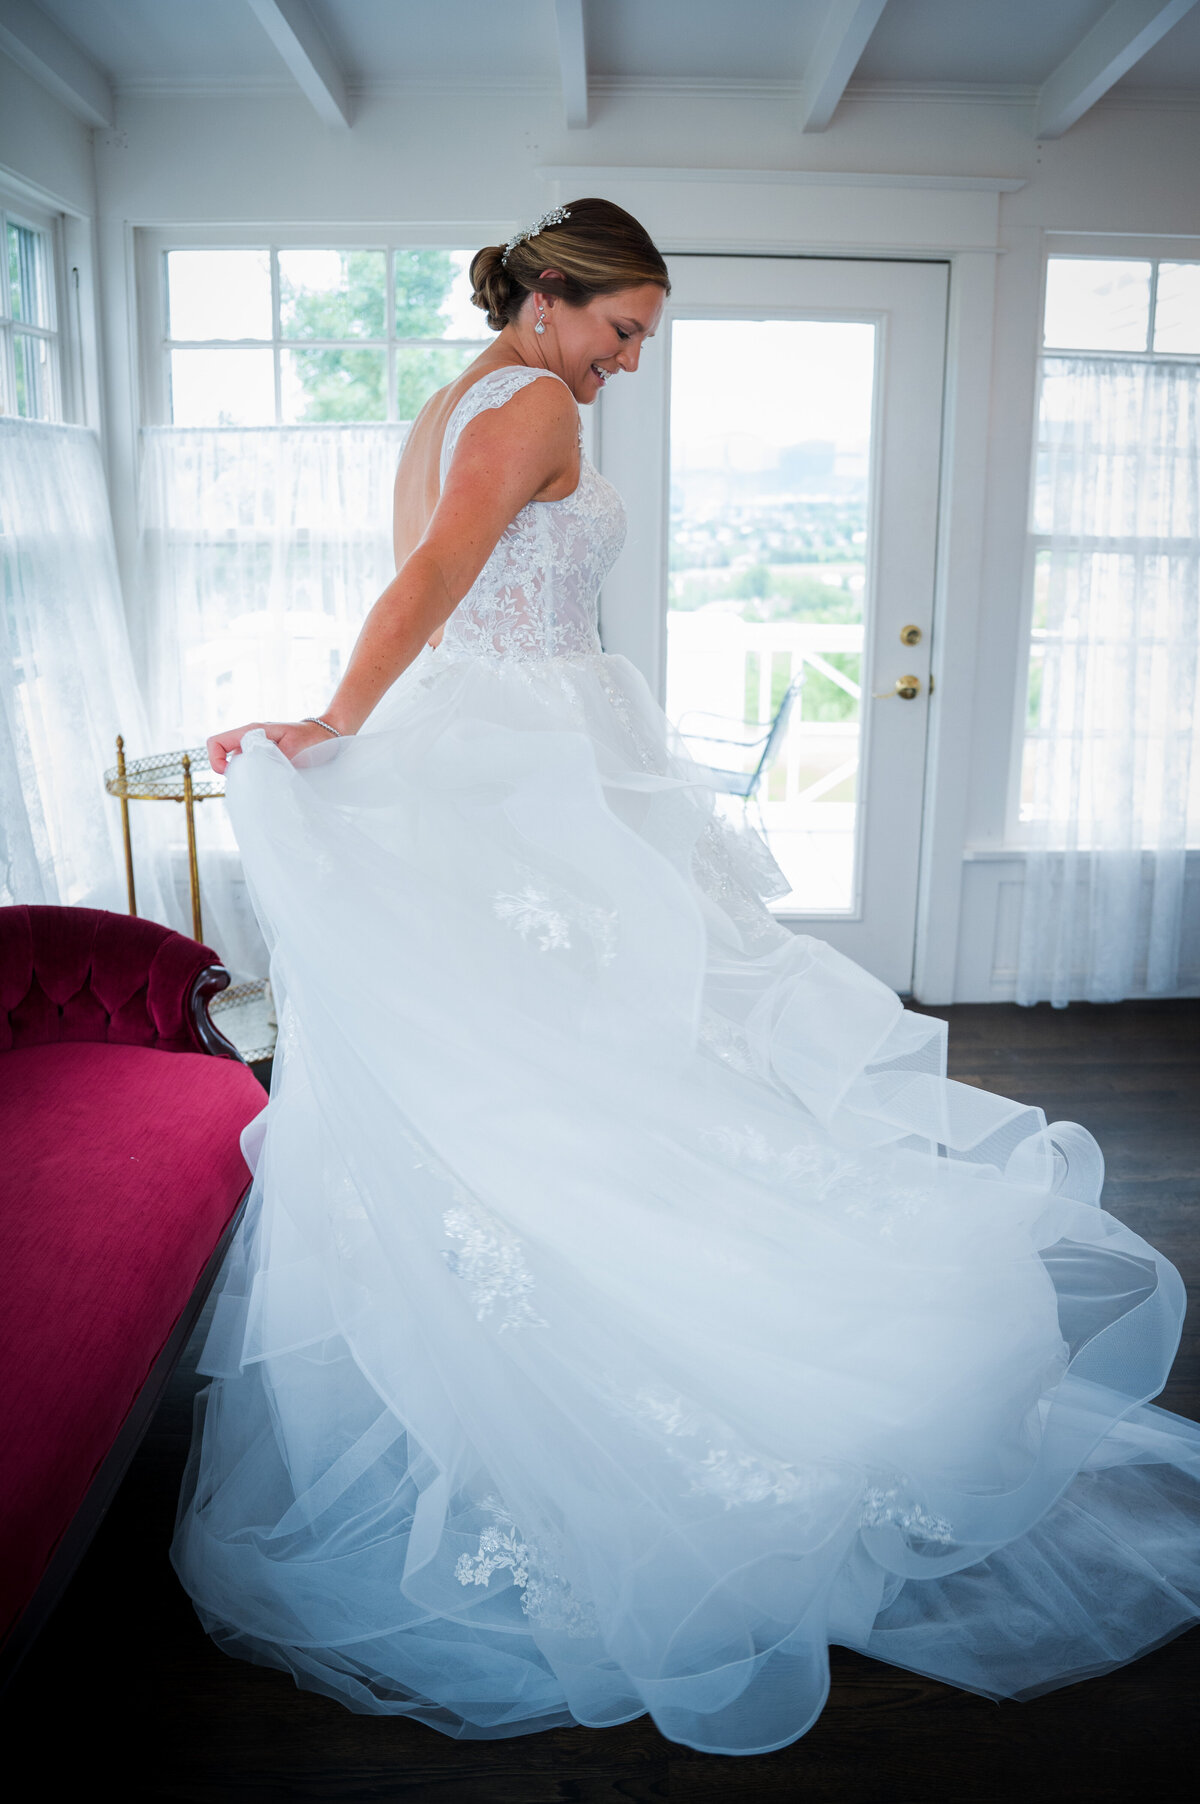 A bride twirls in her wedding dress and smiles, captured by Denver wedding photographer, Casey Van Horn.